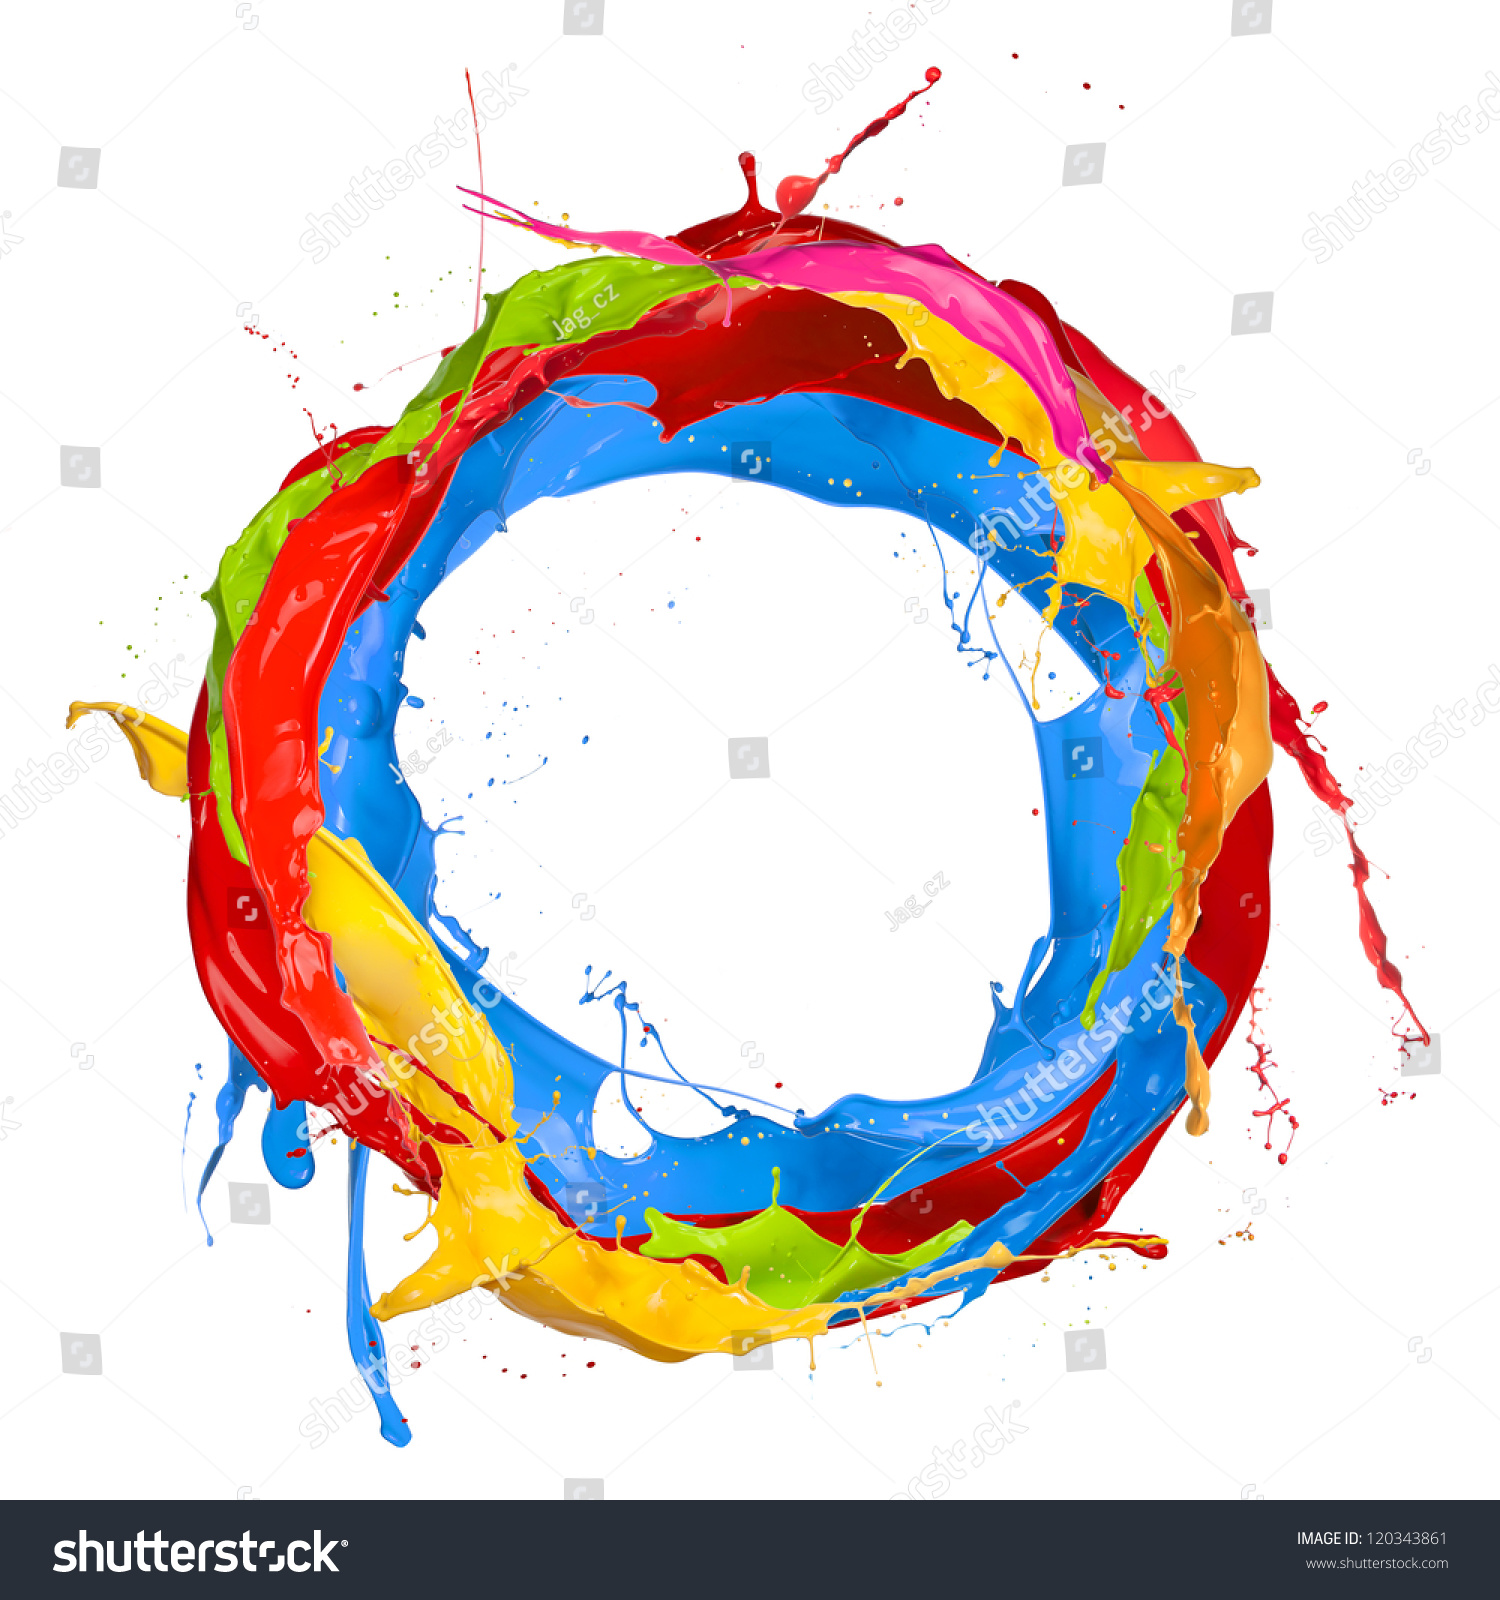  Colored paints splashes circle, isolated on white background #120343861